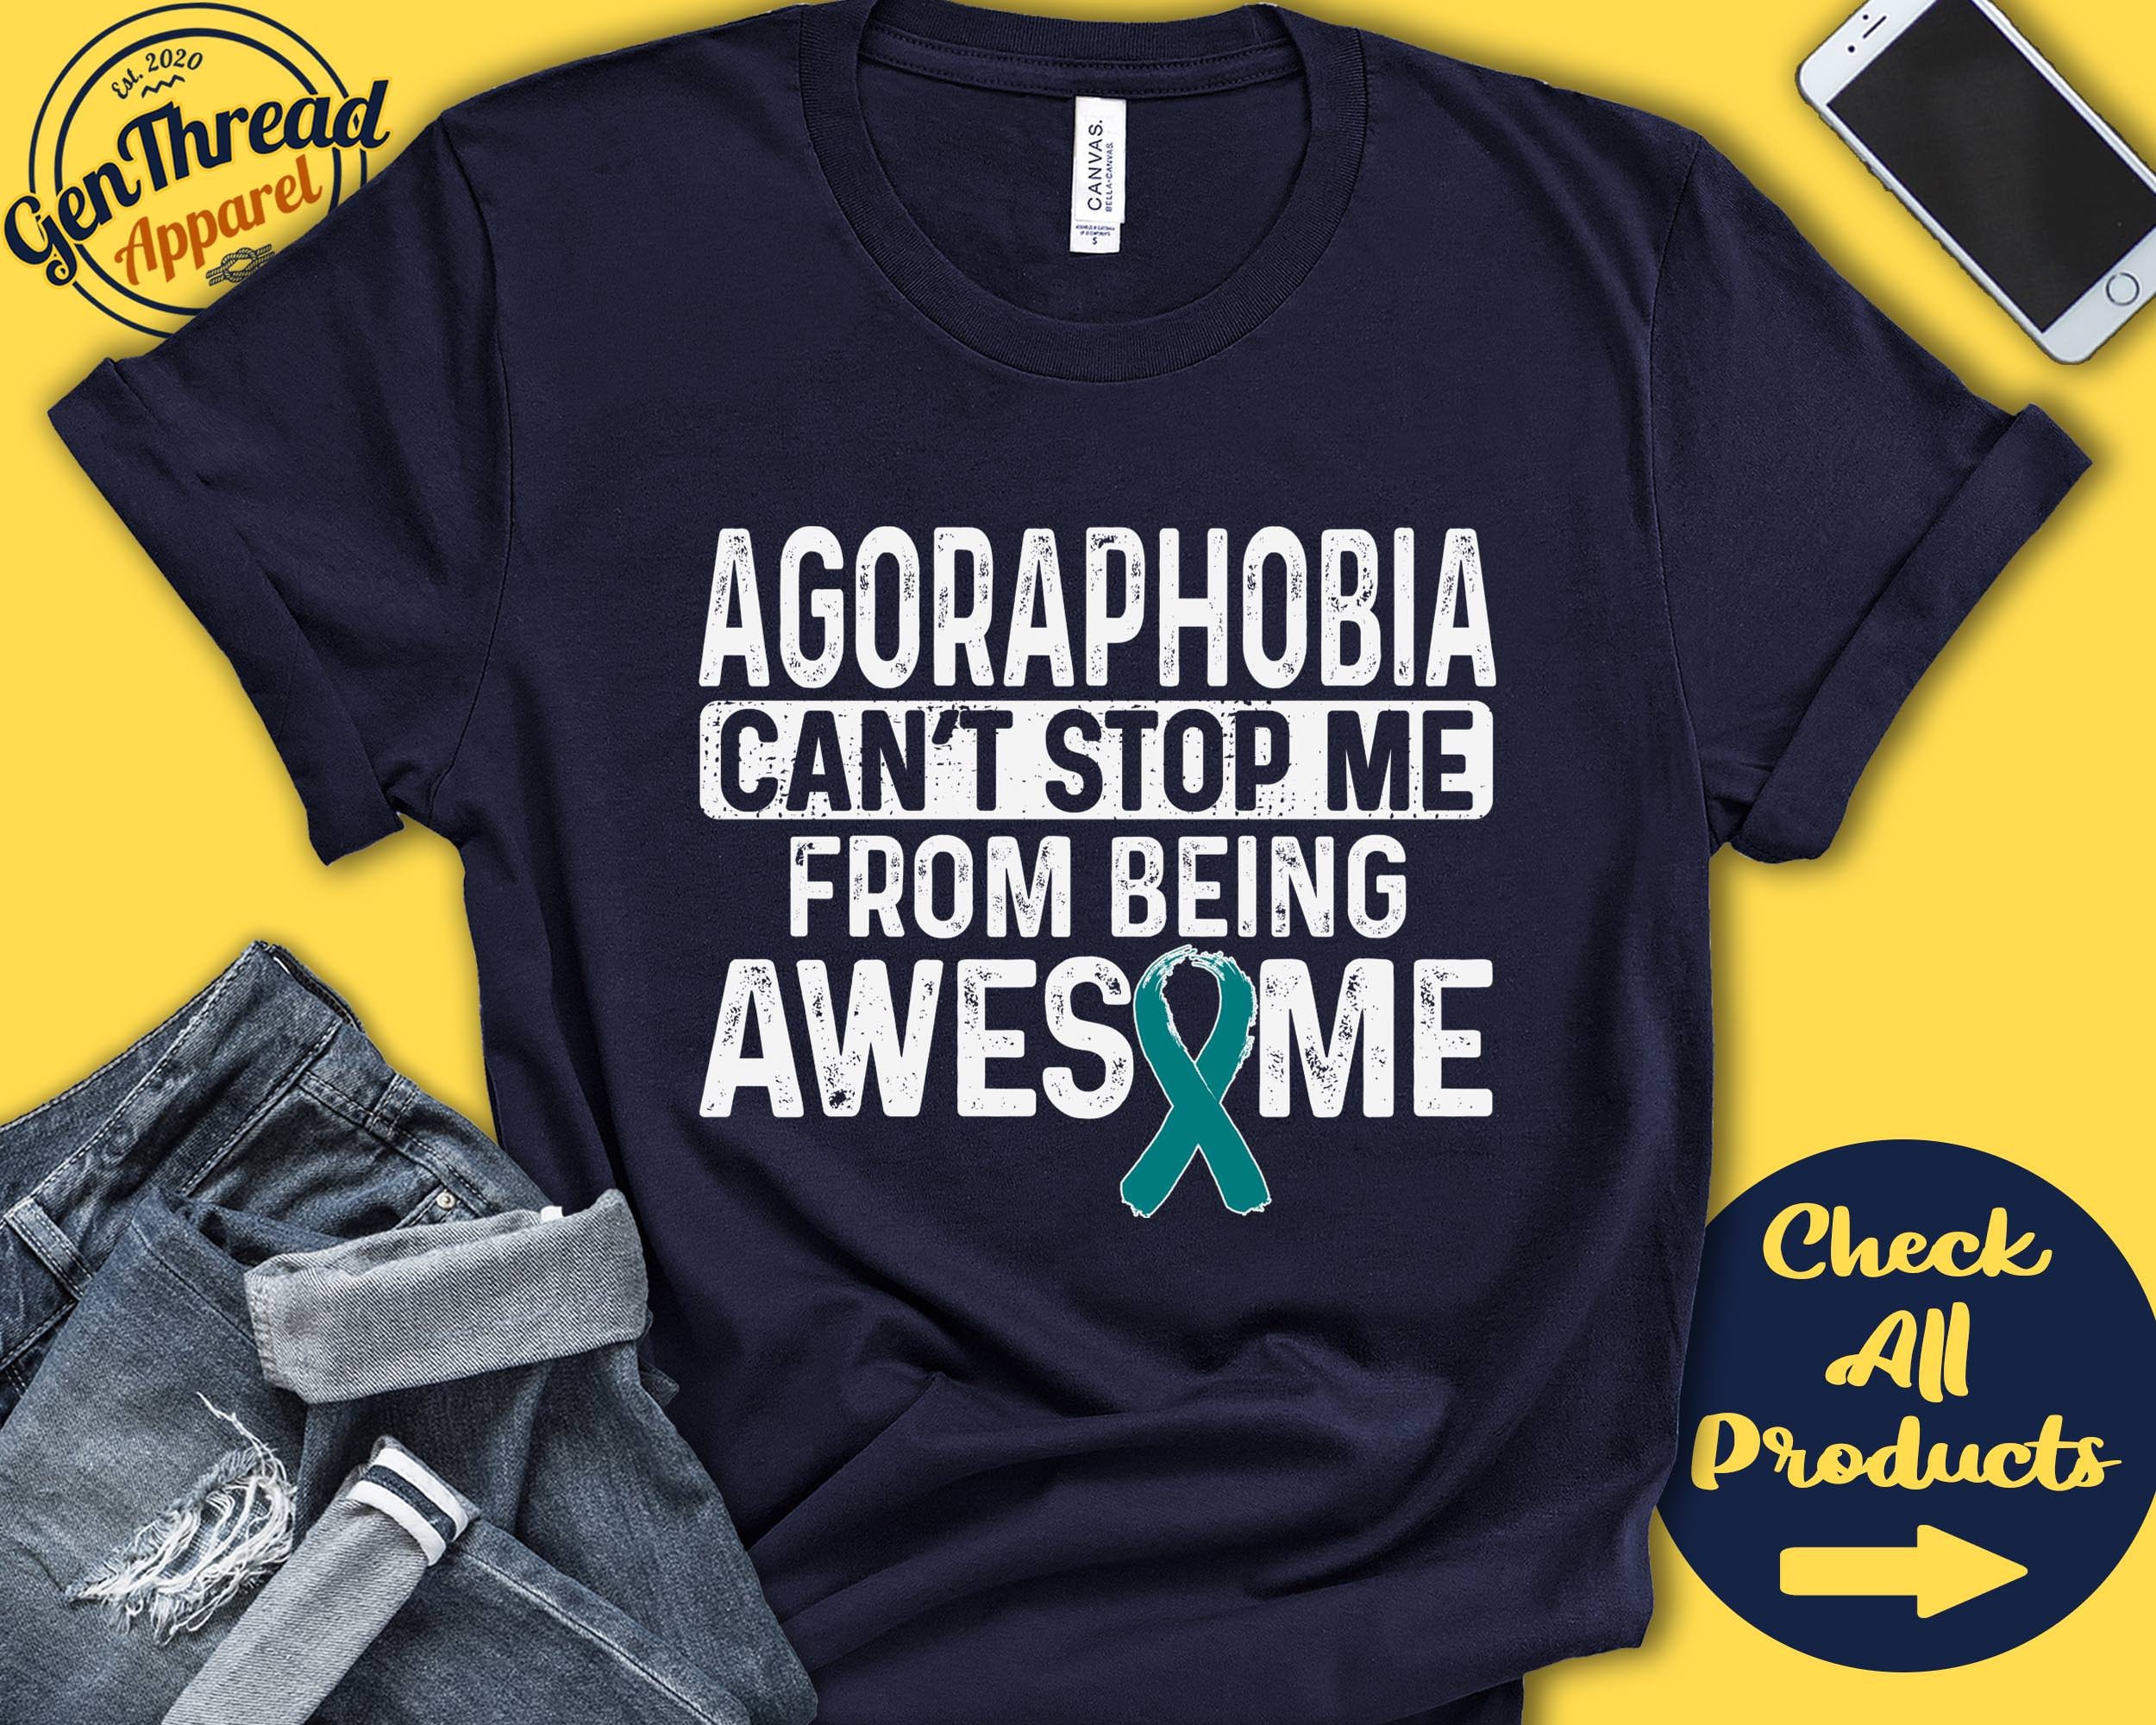 Agoraphobia Shirt Agoraphobia Awareness Teal Ribbon picture pic